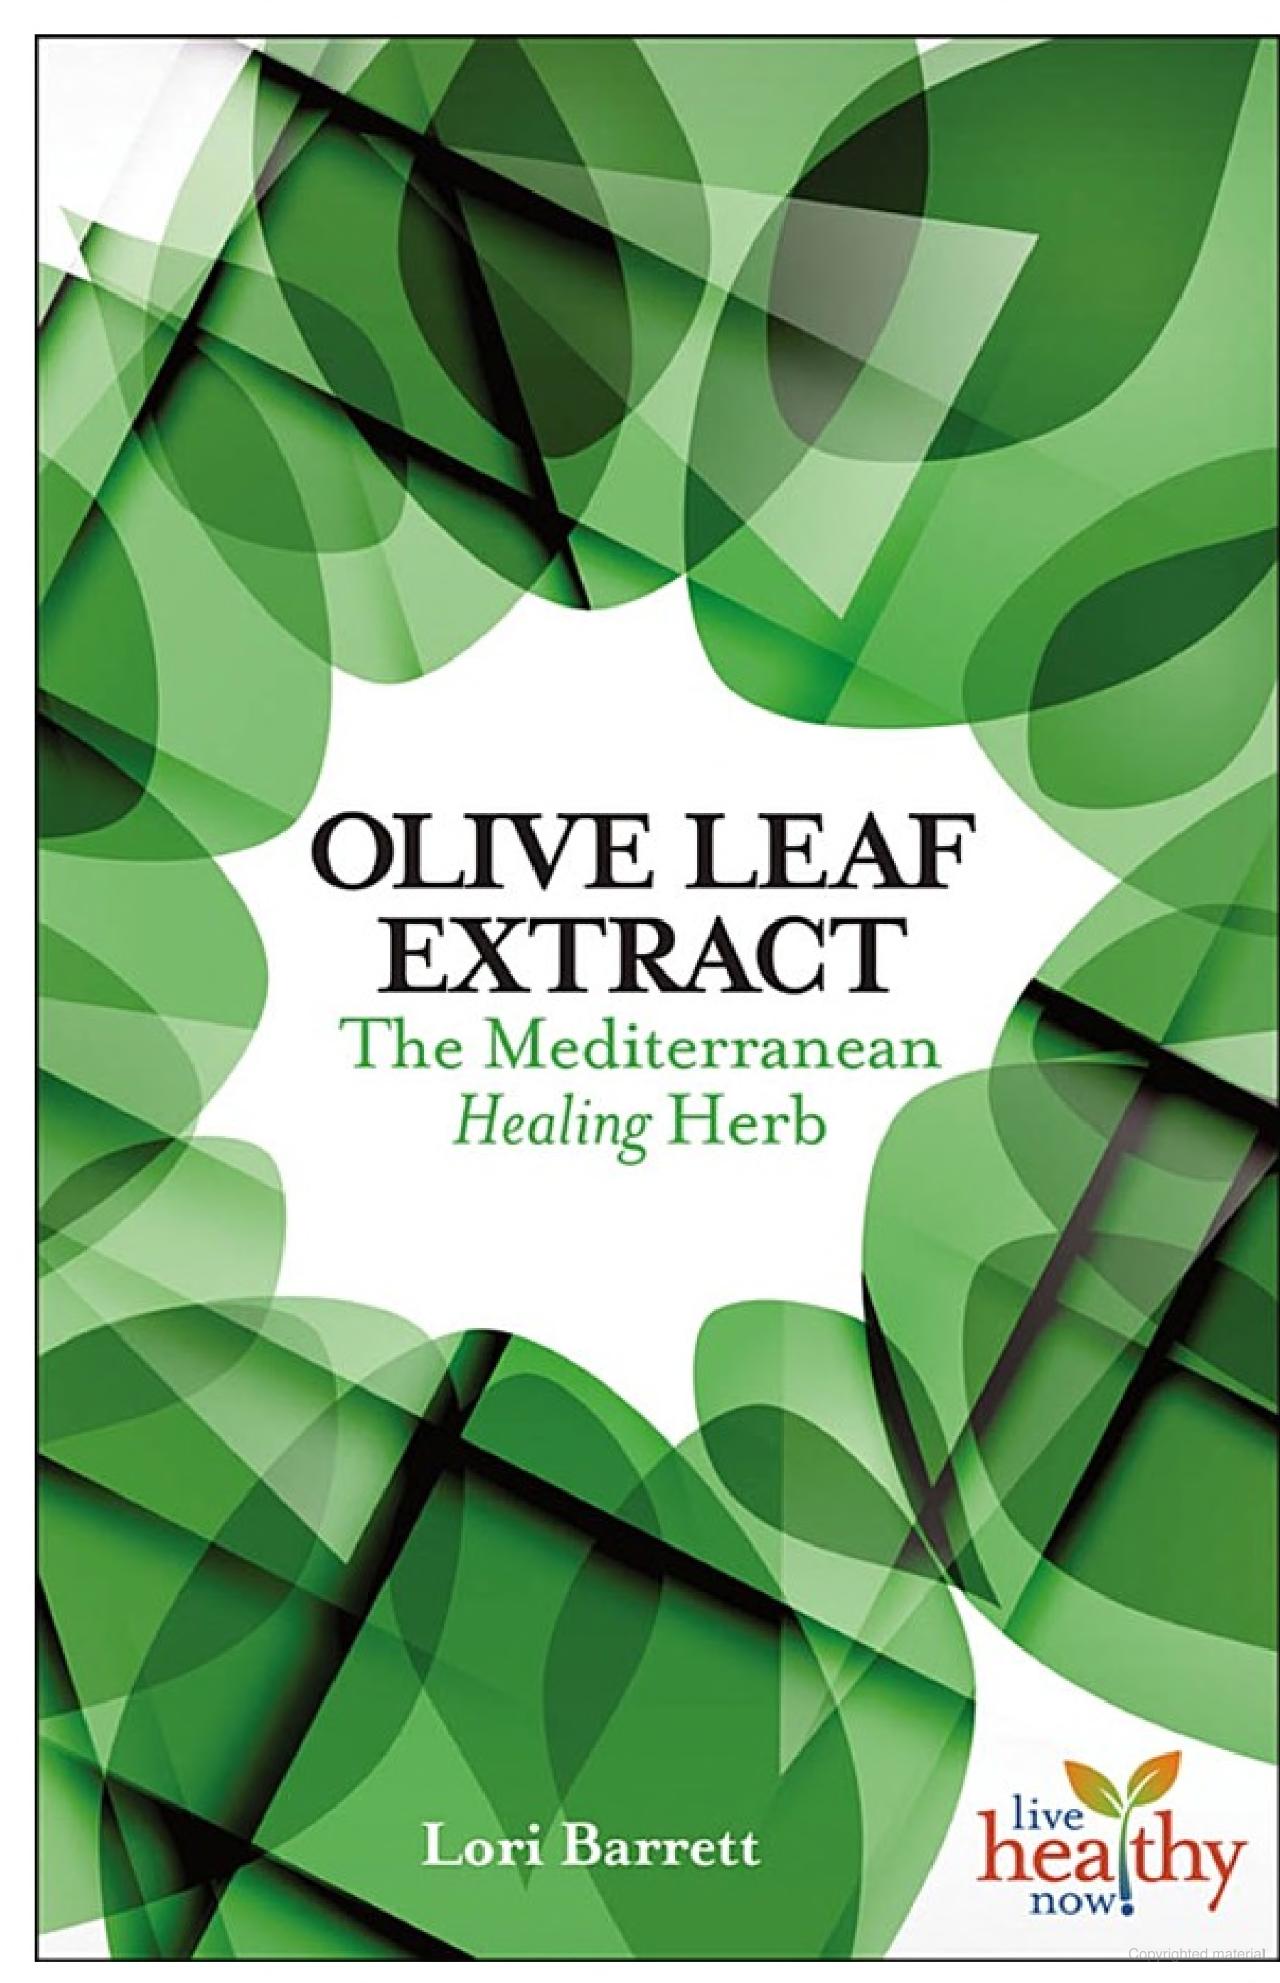 Olive Leaf Extract the Mediterranean Healing Herb by Lori Barrett